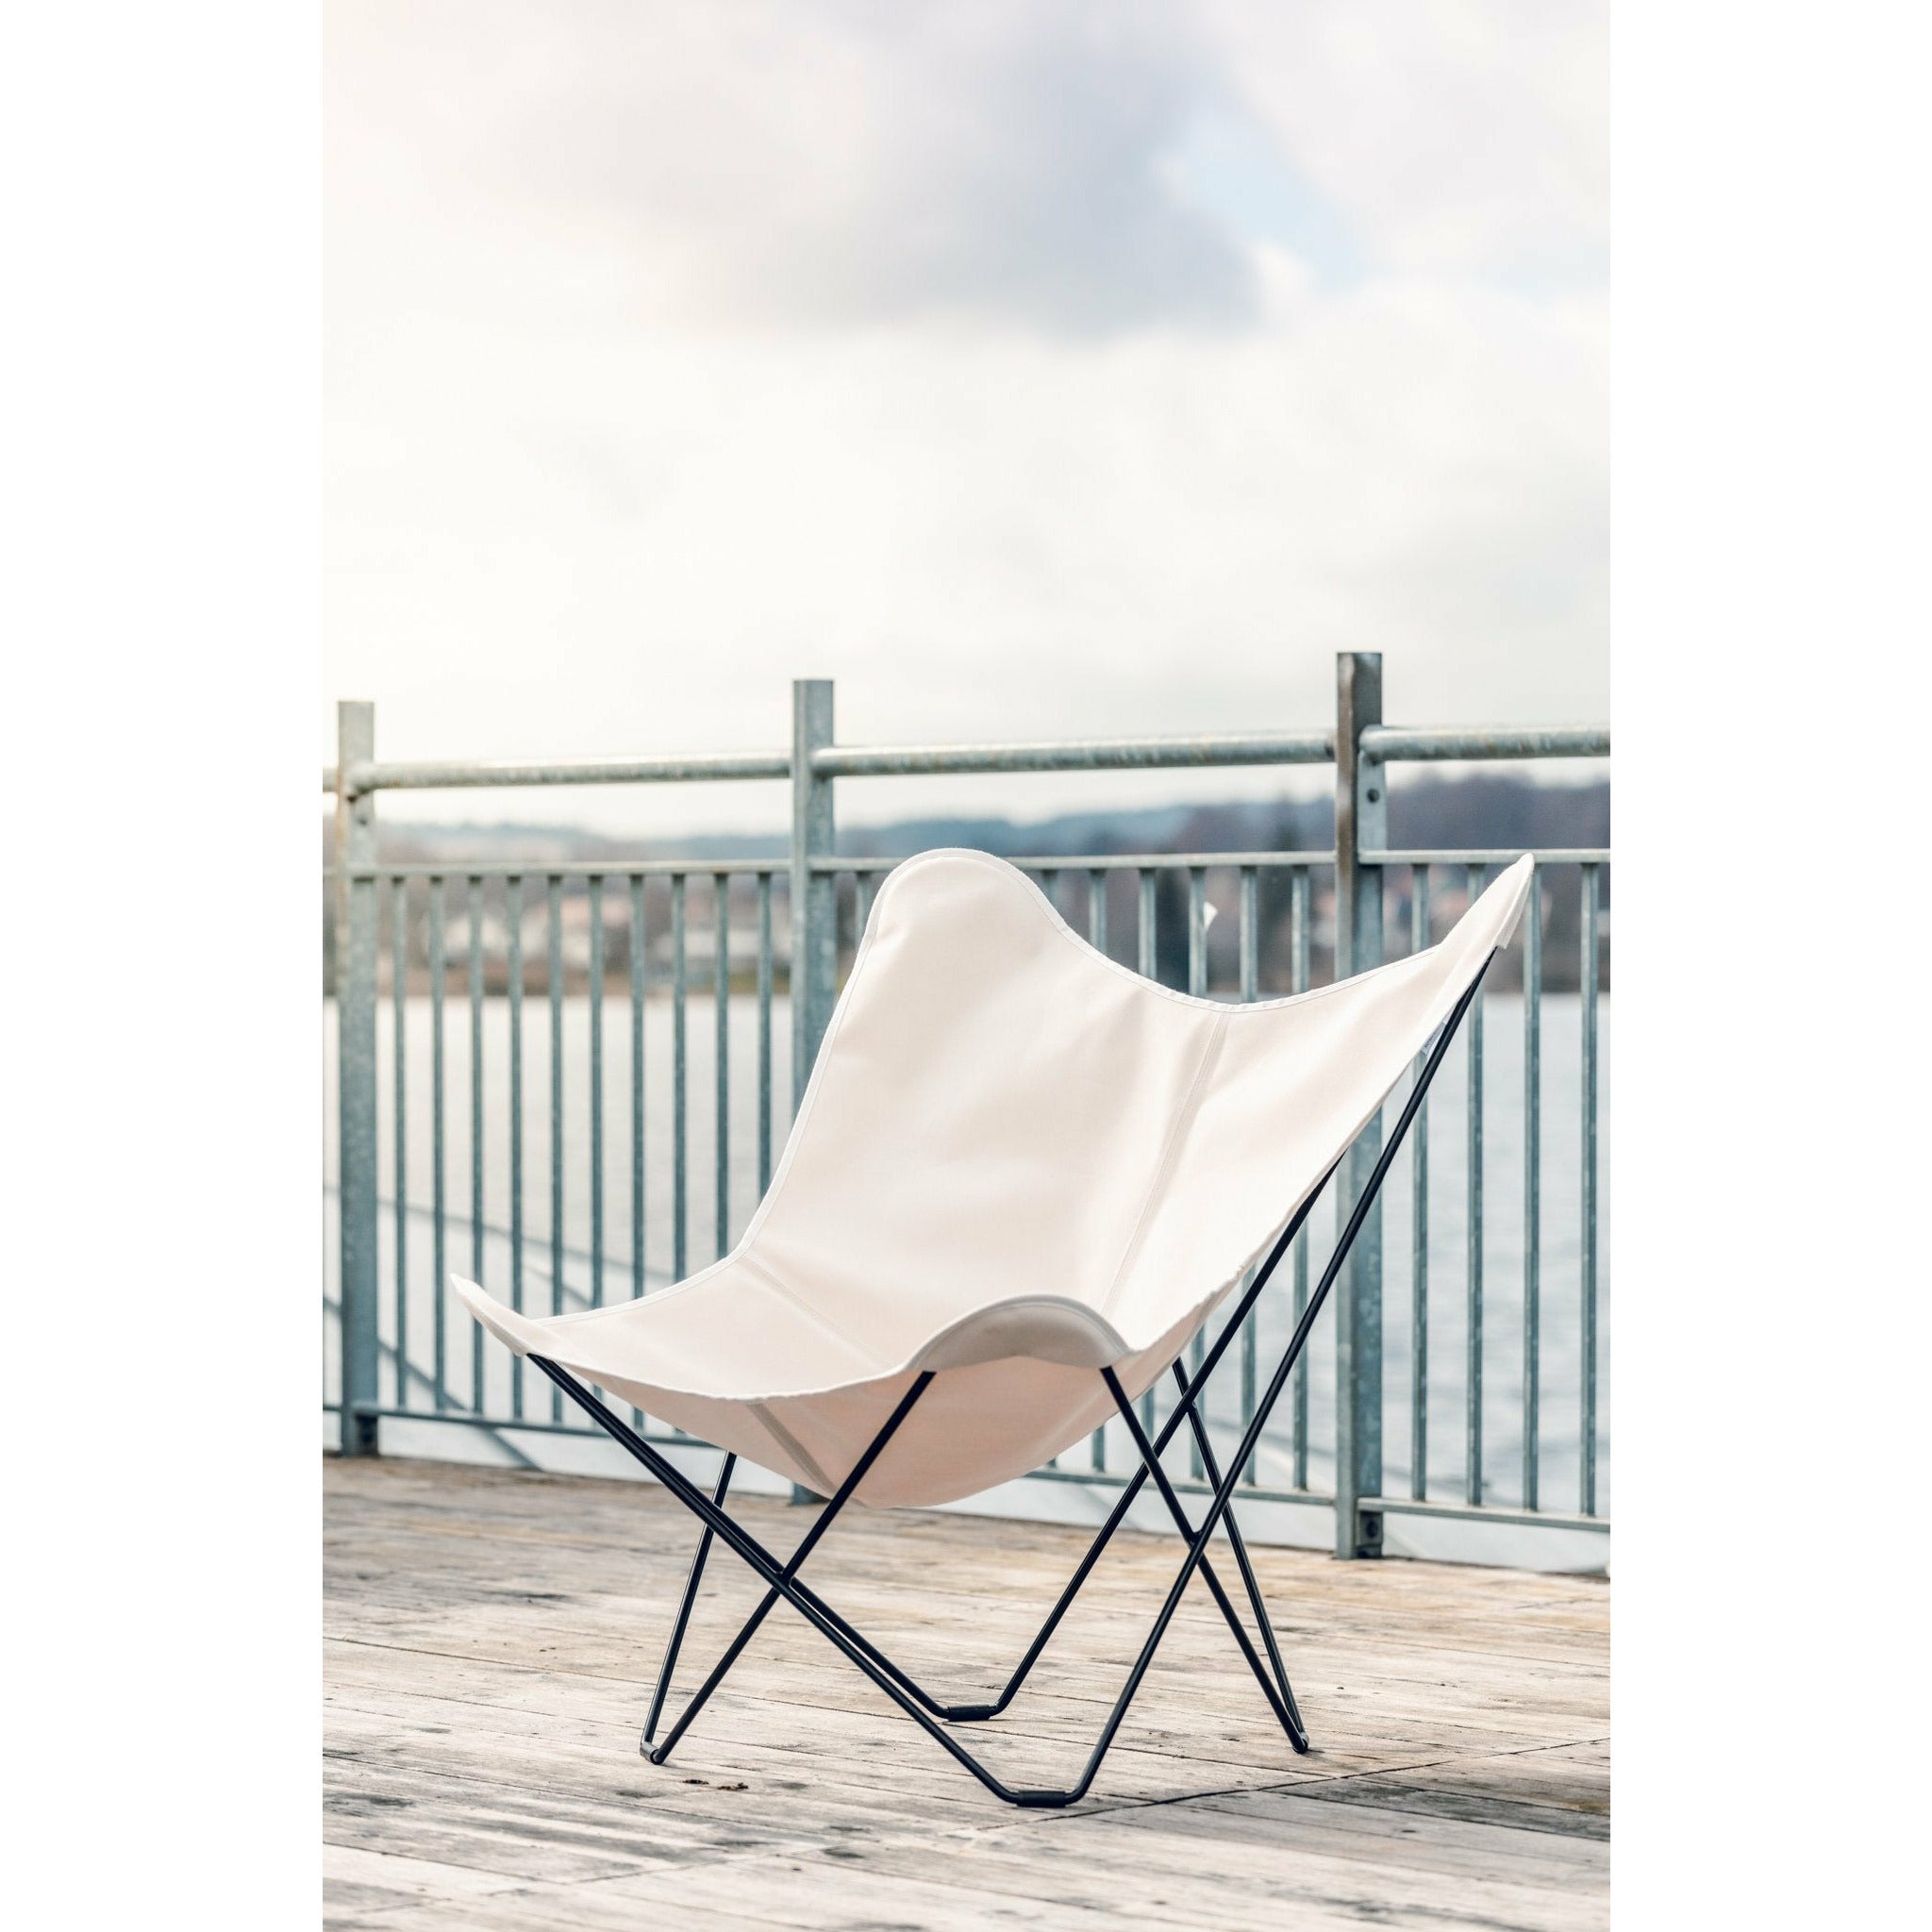 Cuero Sunshine Mariposa Butterfly Chair, Oyster/Chrome